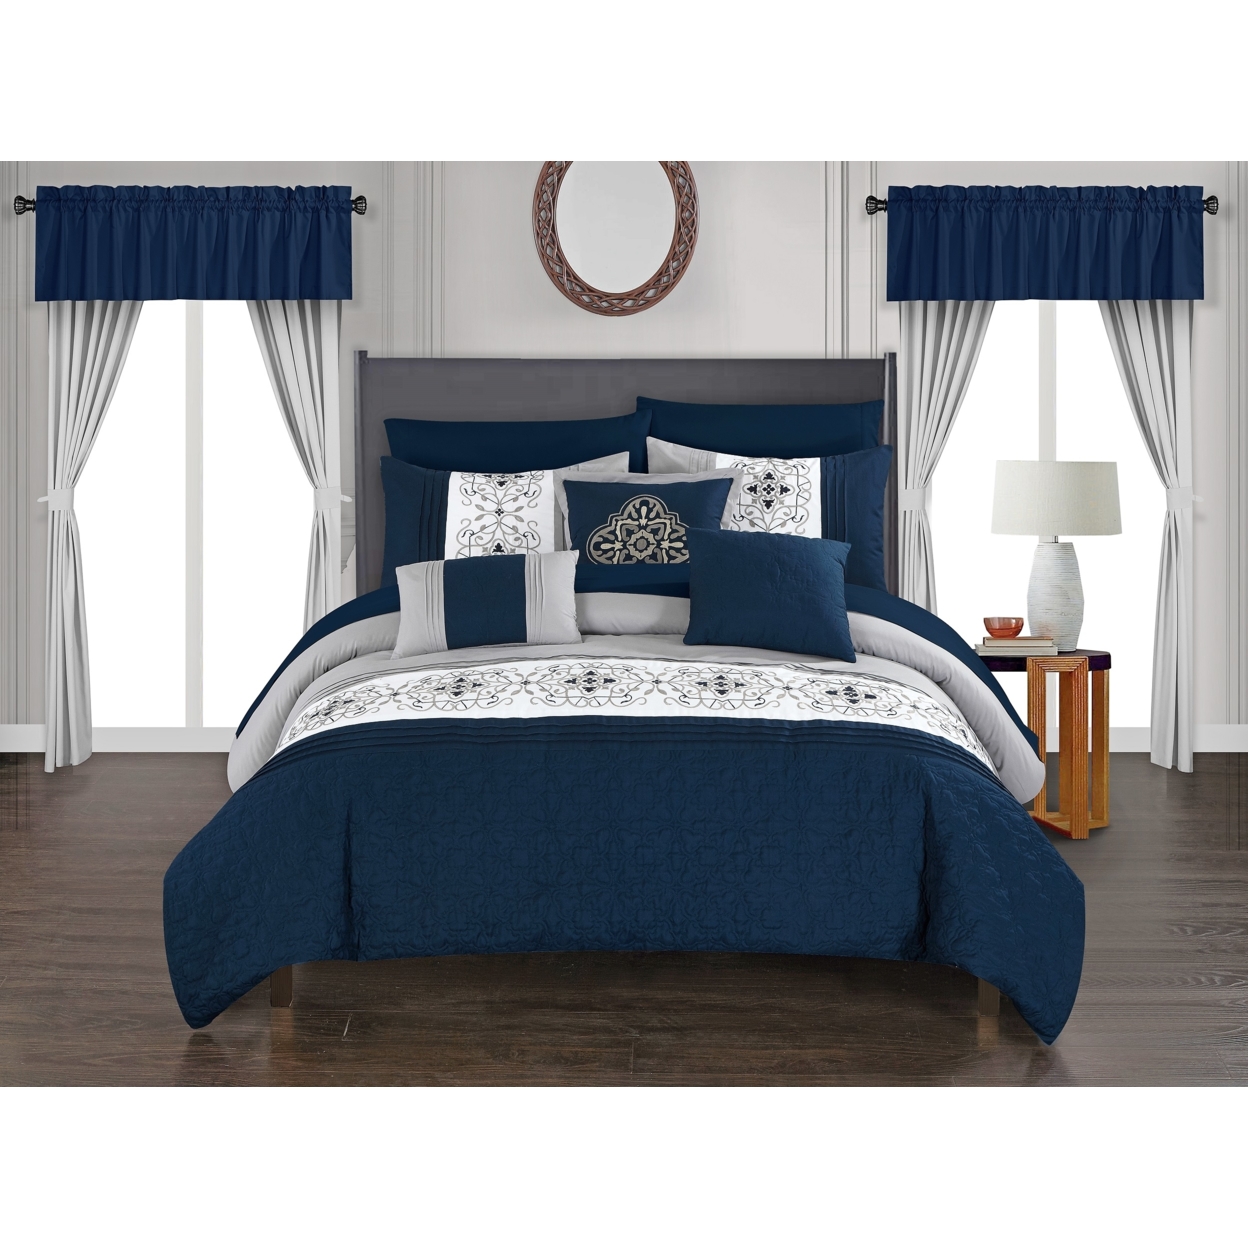 Jurgen 20-Piece Floral Embroidered Bed In A Bag Bedding And Comforter Set - Aqua Blue, King